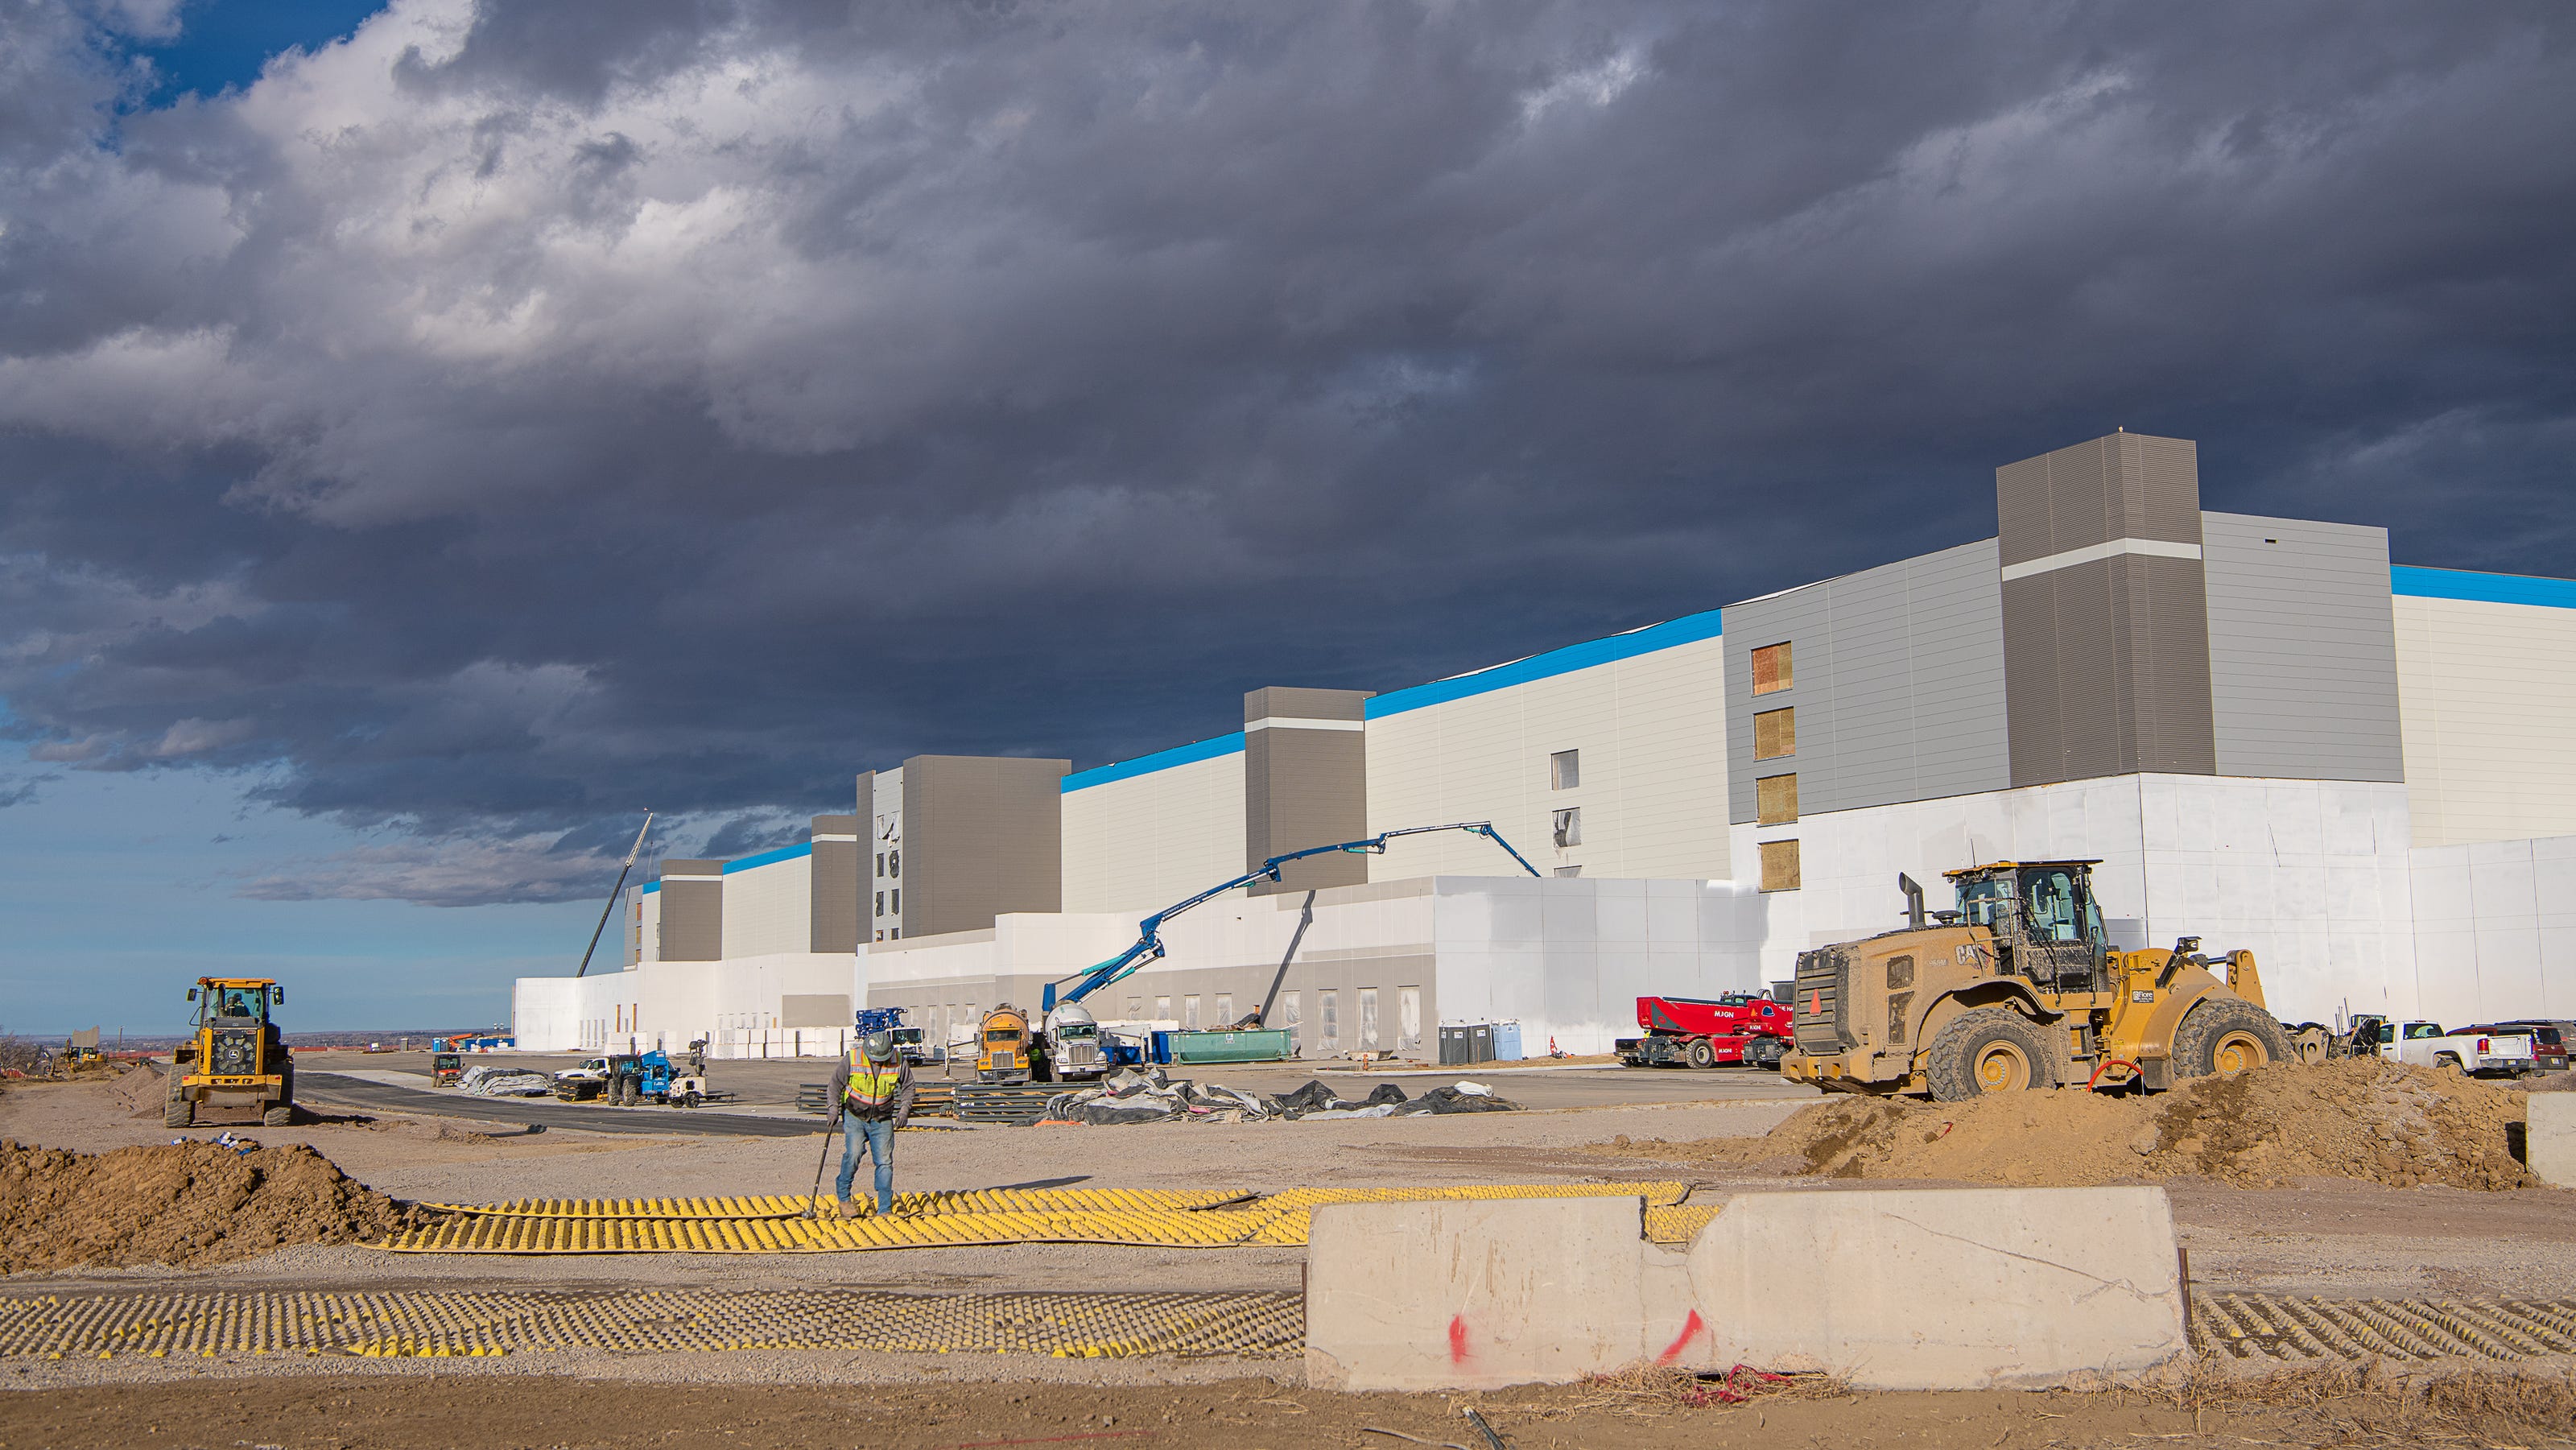  Amazon will fill 1,000-plus jobs in Northern Colorado when it opens new fulfillment center 